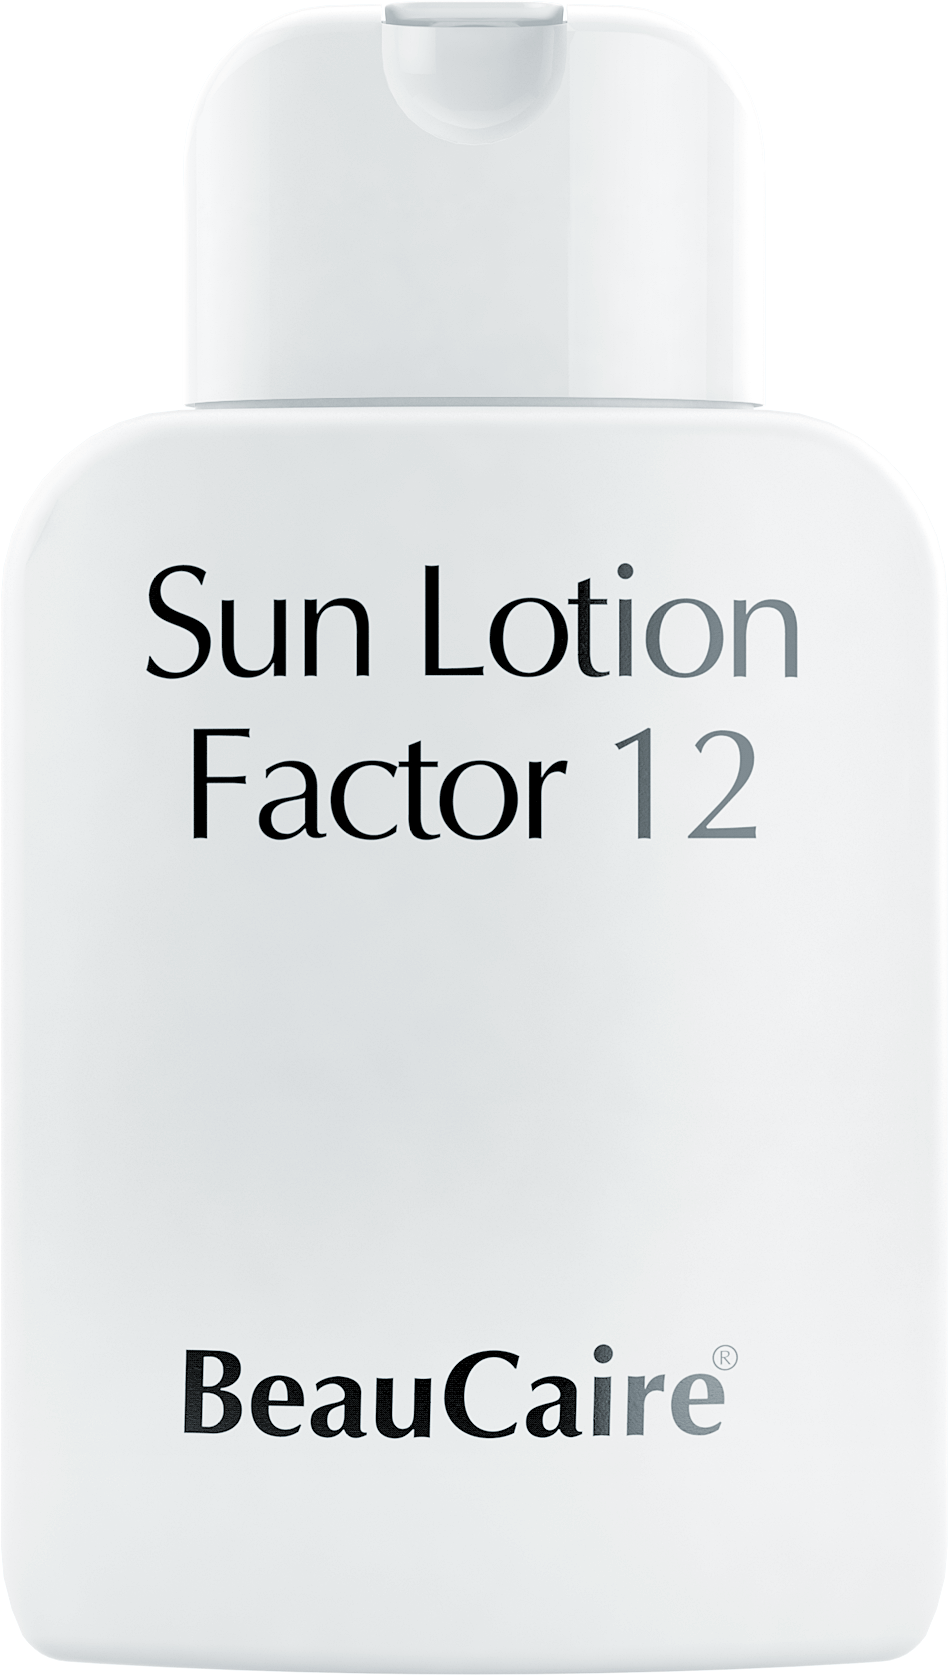 Sun Lotion Factor 12